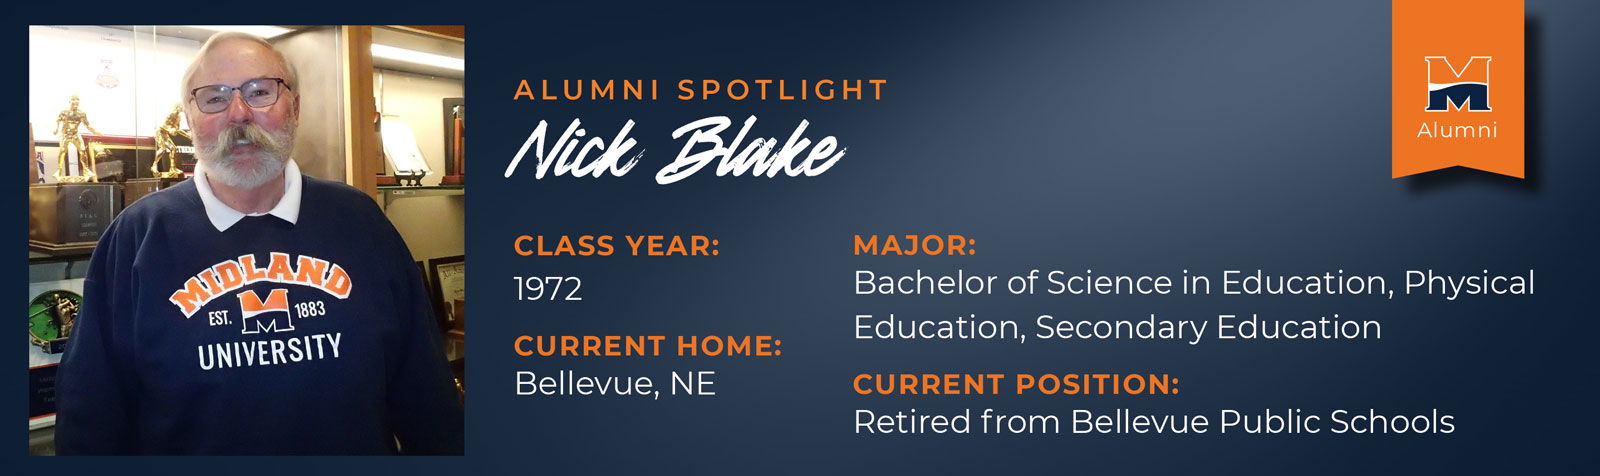 Nick Blake Alumni Spotlight